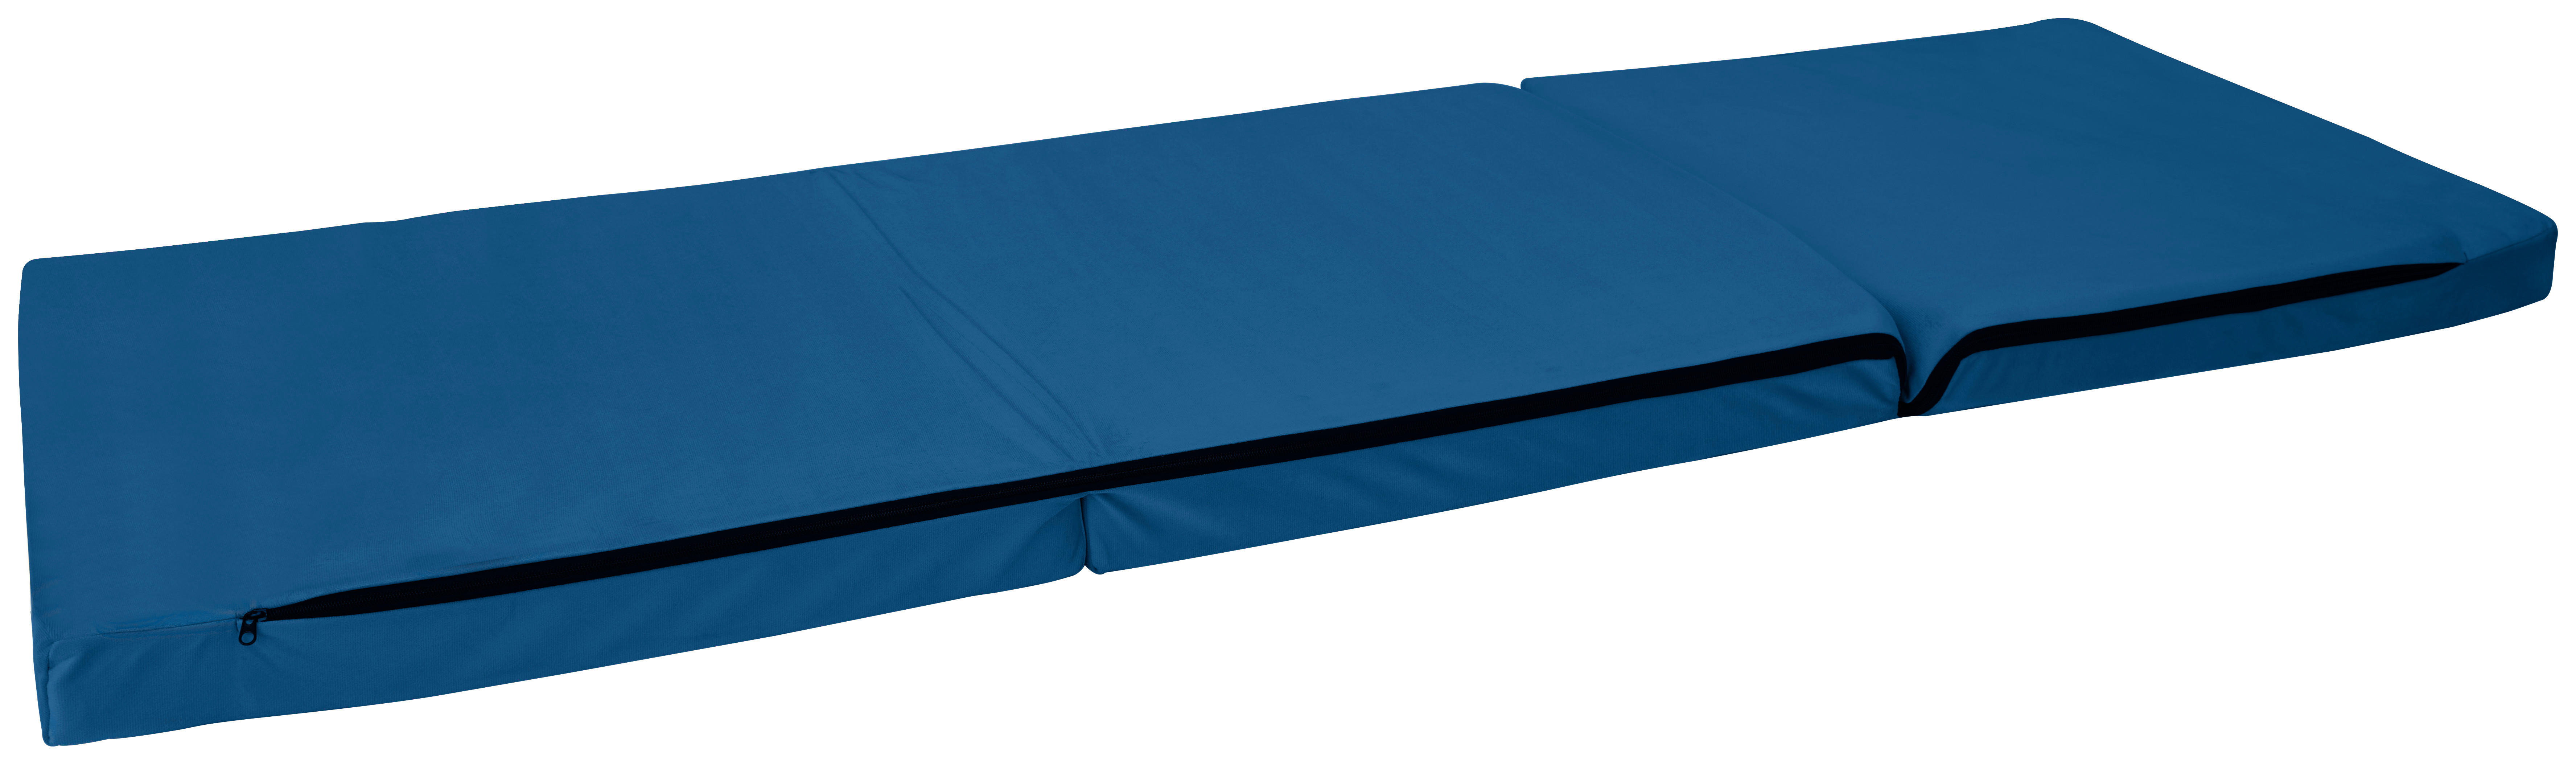 FALTMATRATZE 65/186 cm  - Blau, MODERN, Textil (65/186cm)